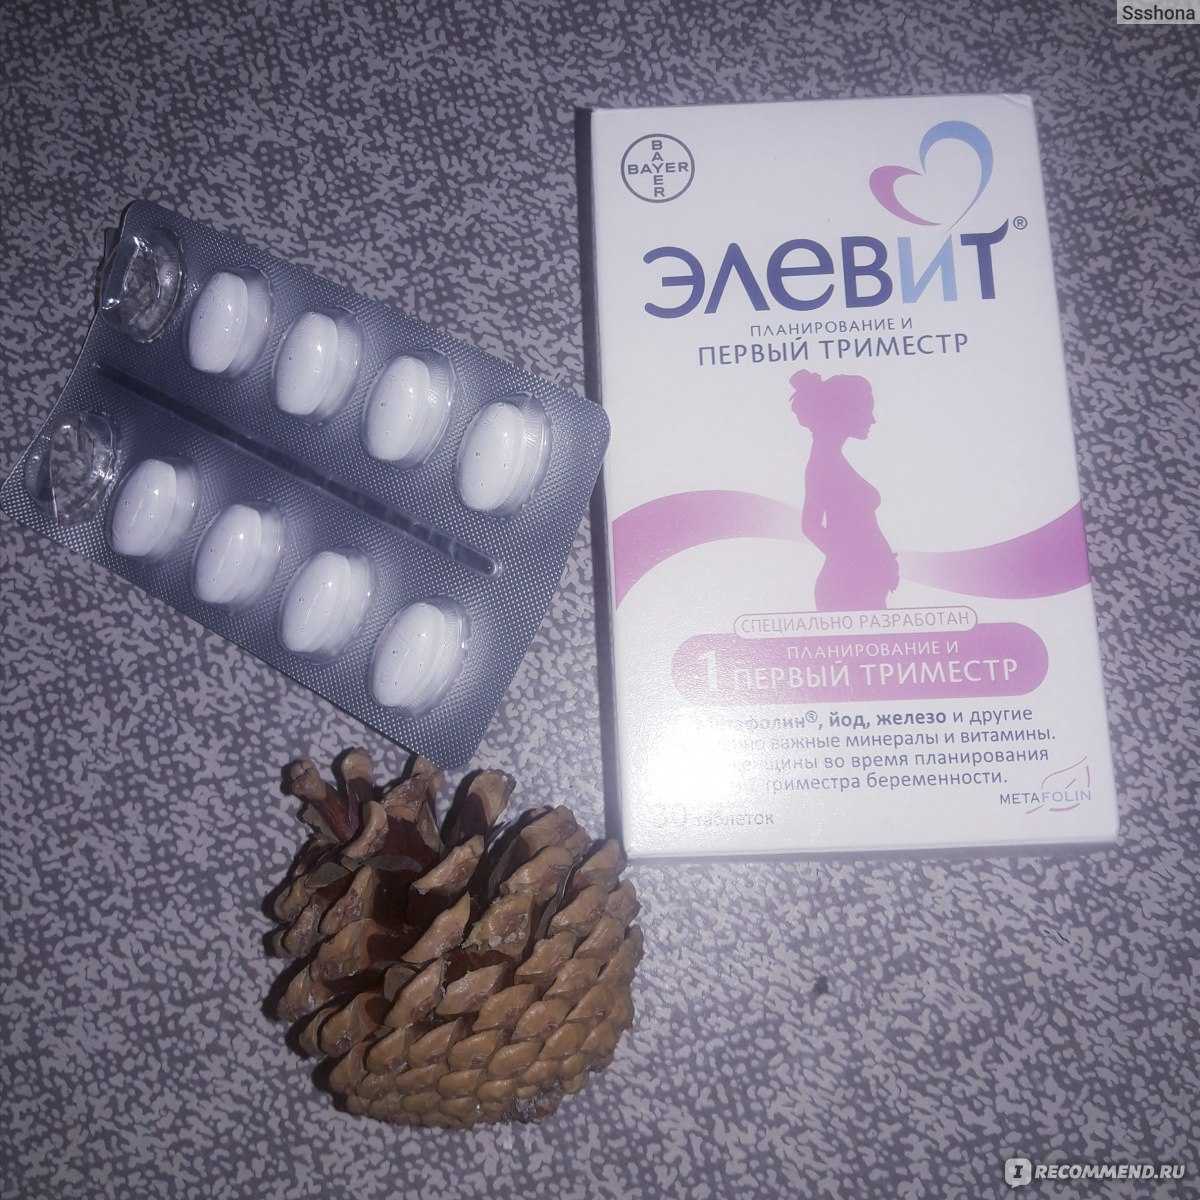 Элевит Пронаталь 1 Триместр Цена 30 Таблеток